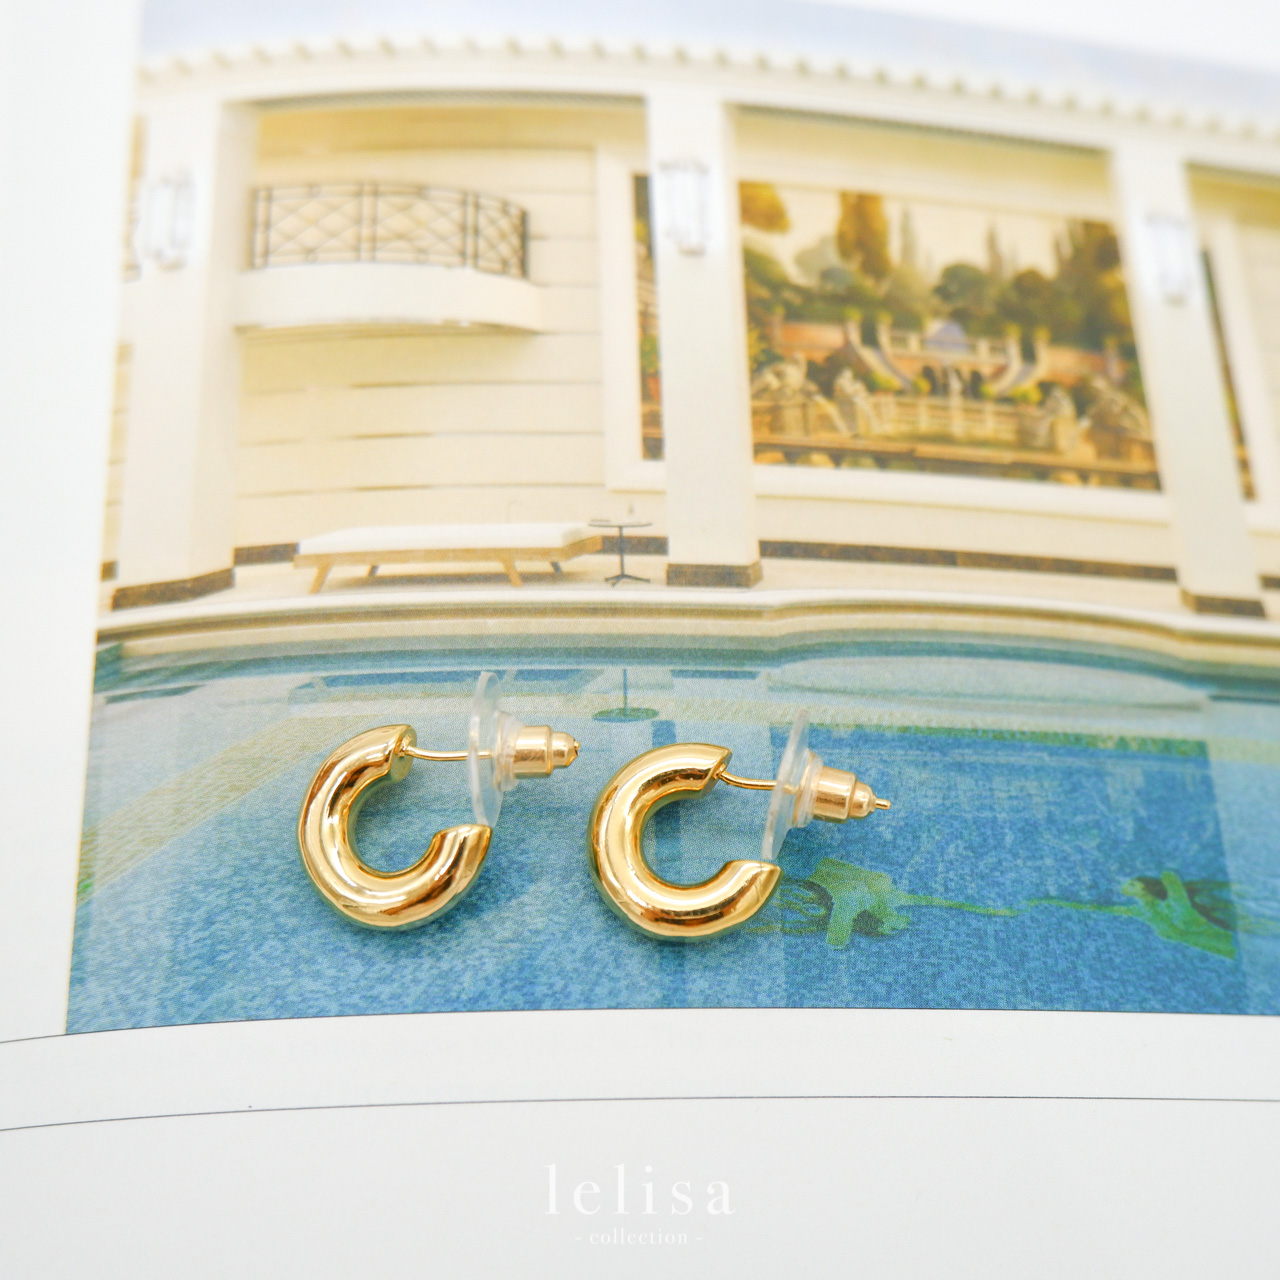 LELISA - Venice Earring - ต่างหูสีทอง เรียบหรู น่ารัก ชิคๆ Gold Plated Earring